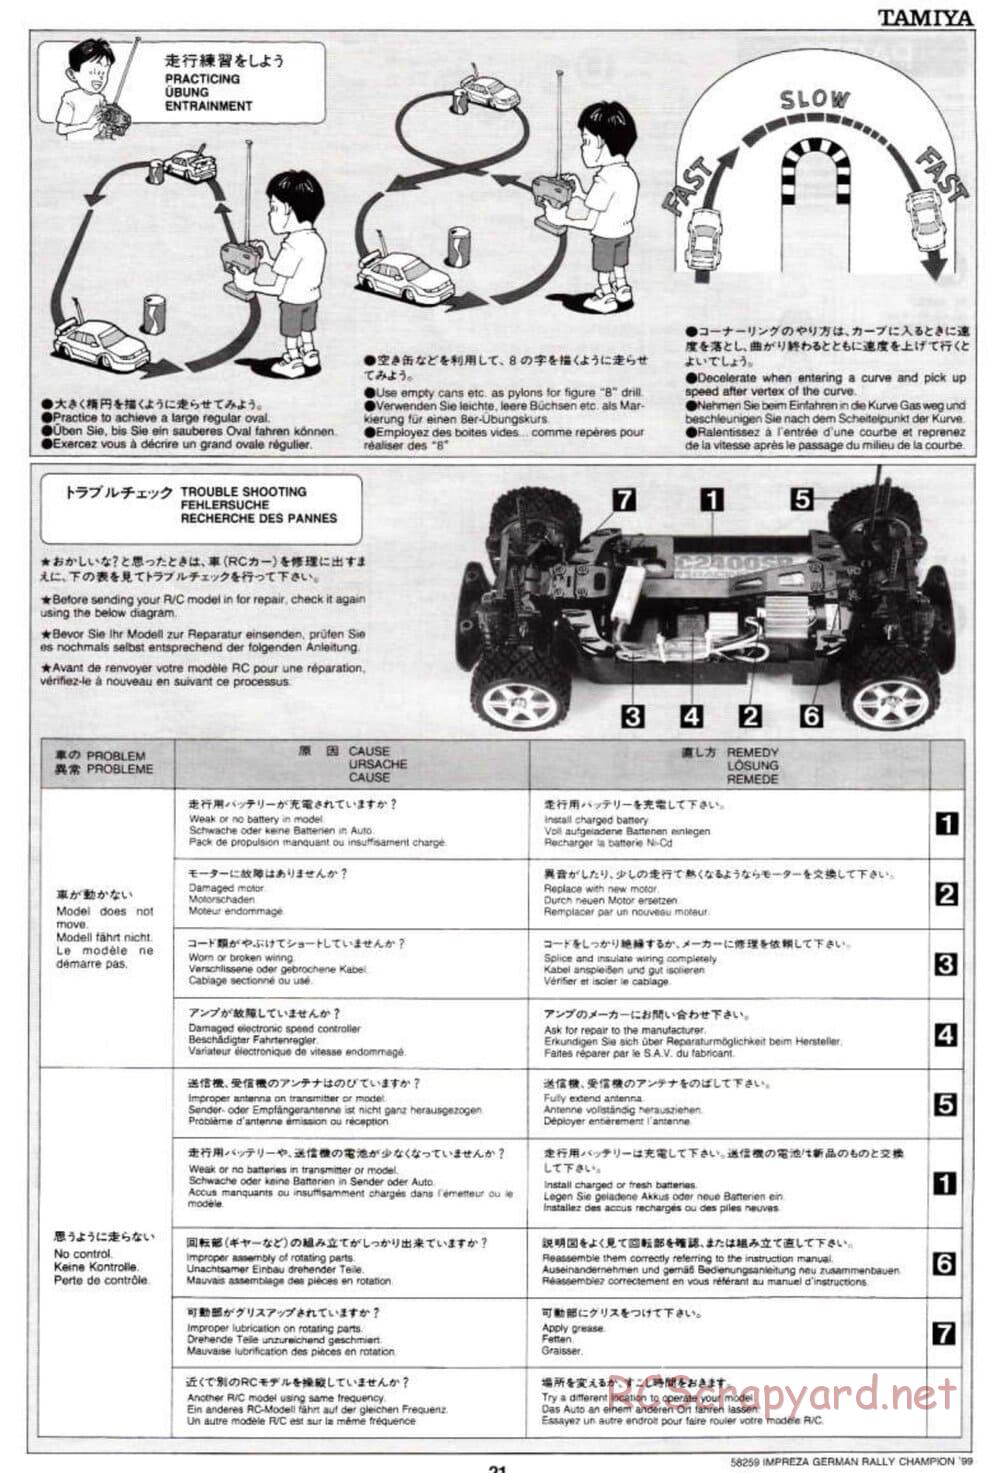 Tamiya - Subaru Impreza German Rally Champion 99 - TB-01 Chassis - Manual - Page 21